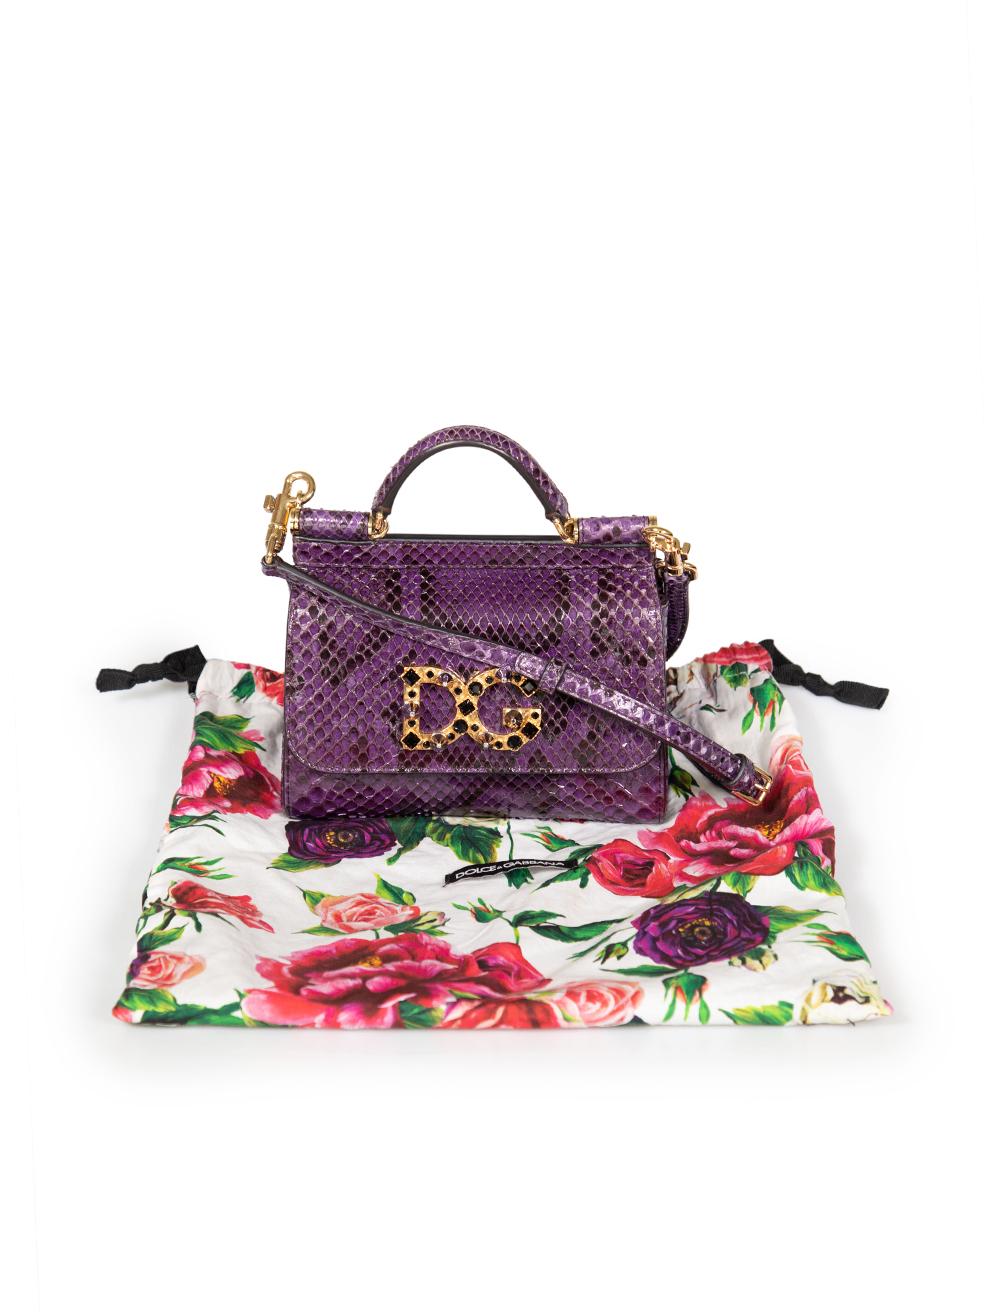 Dolce & Gabbana Limited Edition Purple Snakeskin Miss Sicily Bag 4